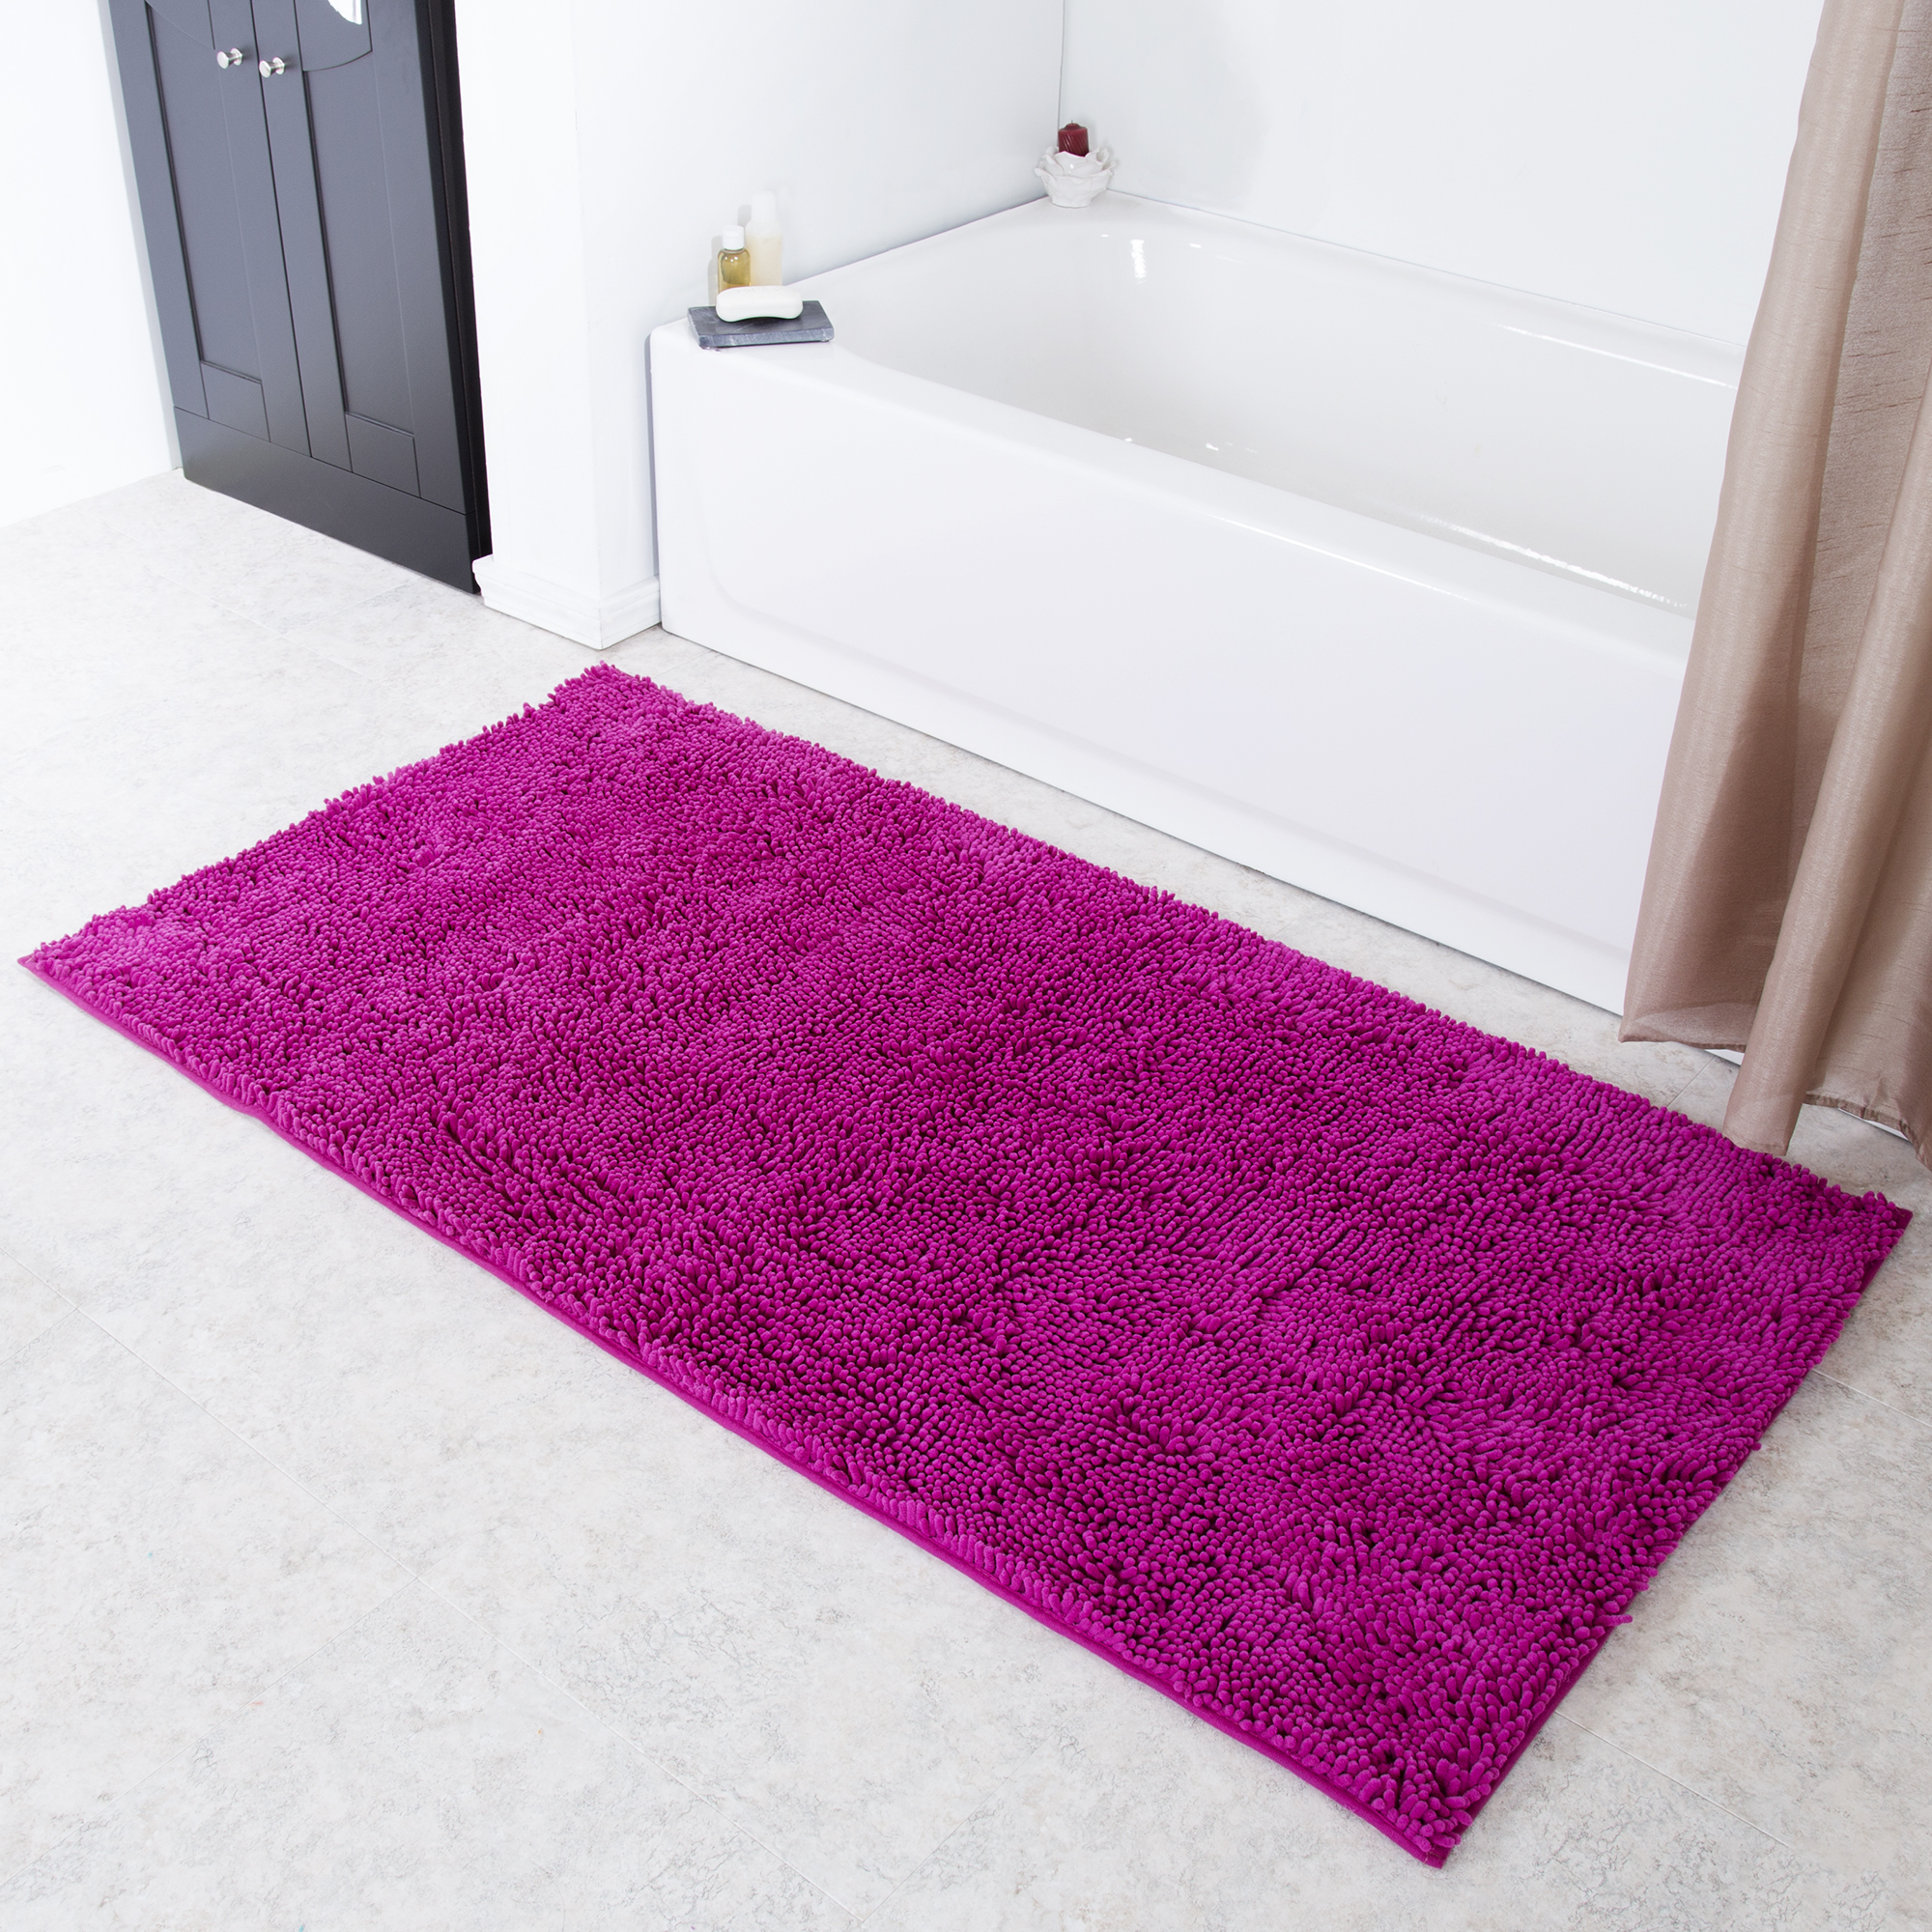 Lavish Home High Pile Shag Rug Carpet - Orchid 30 X 60 Inches